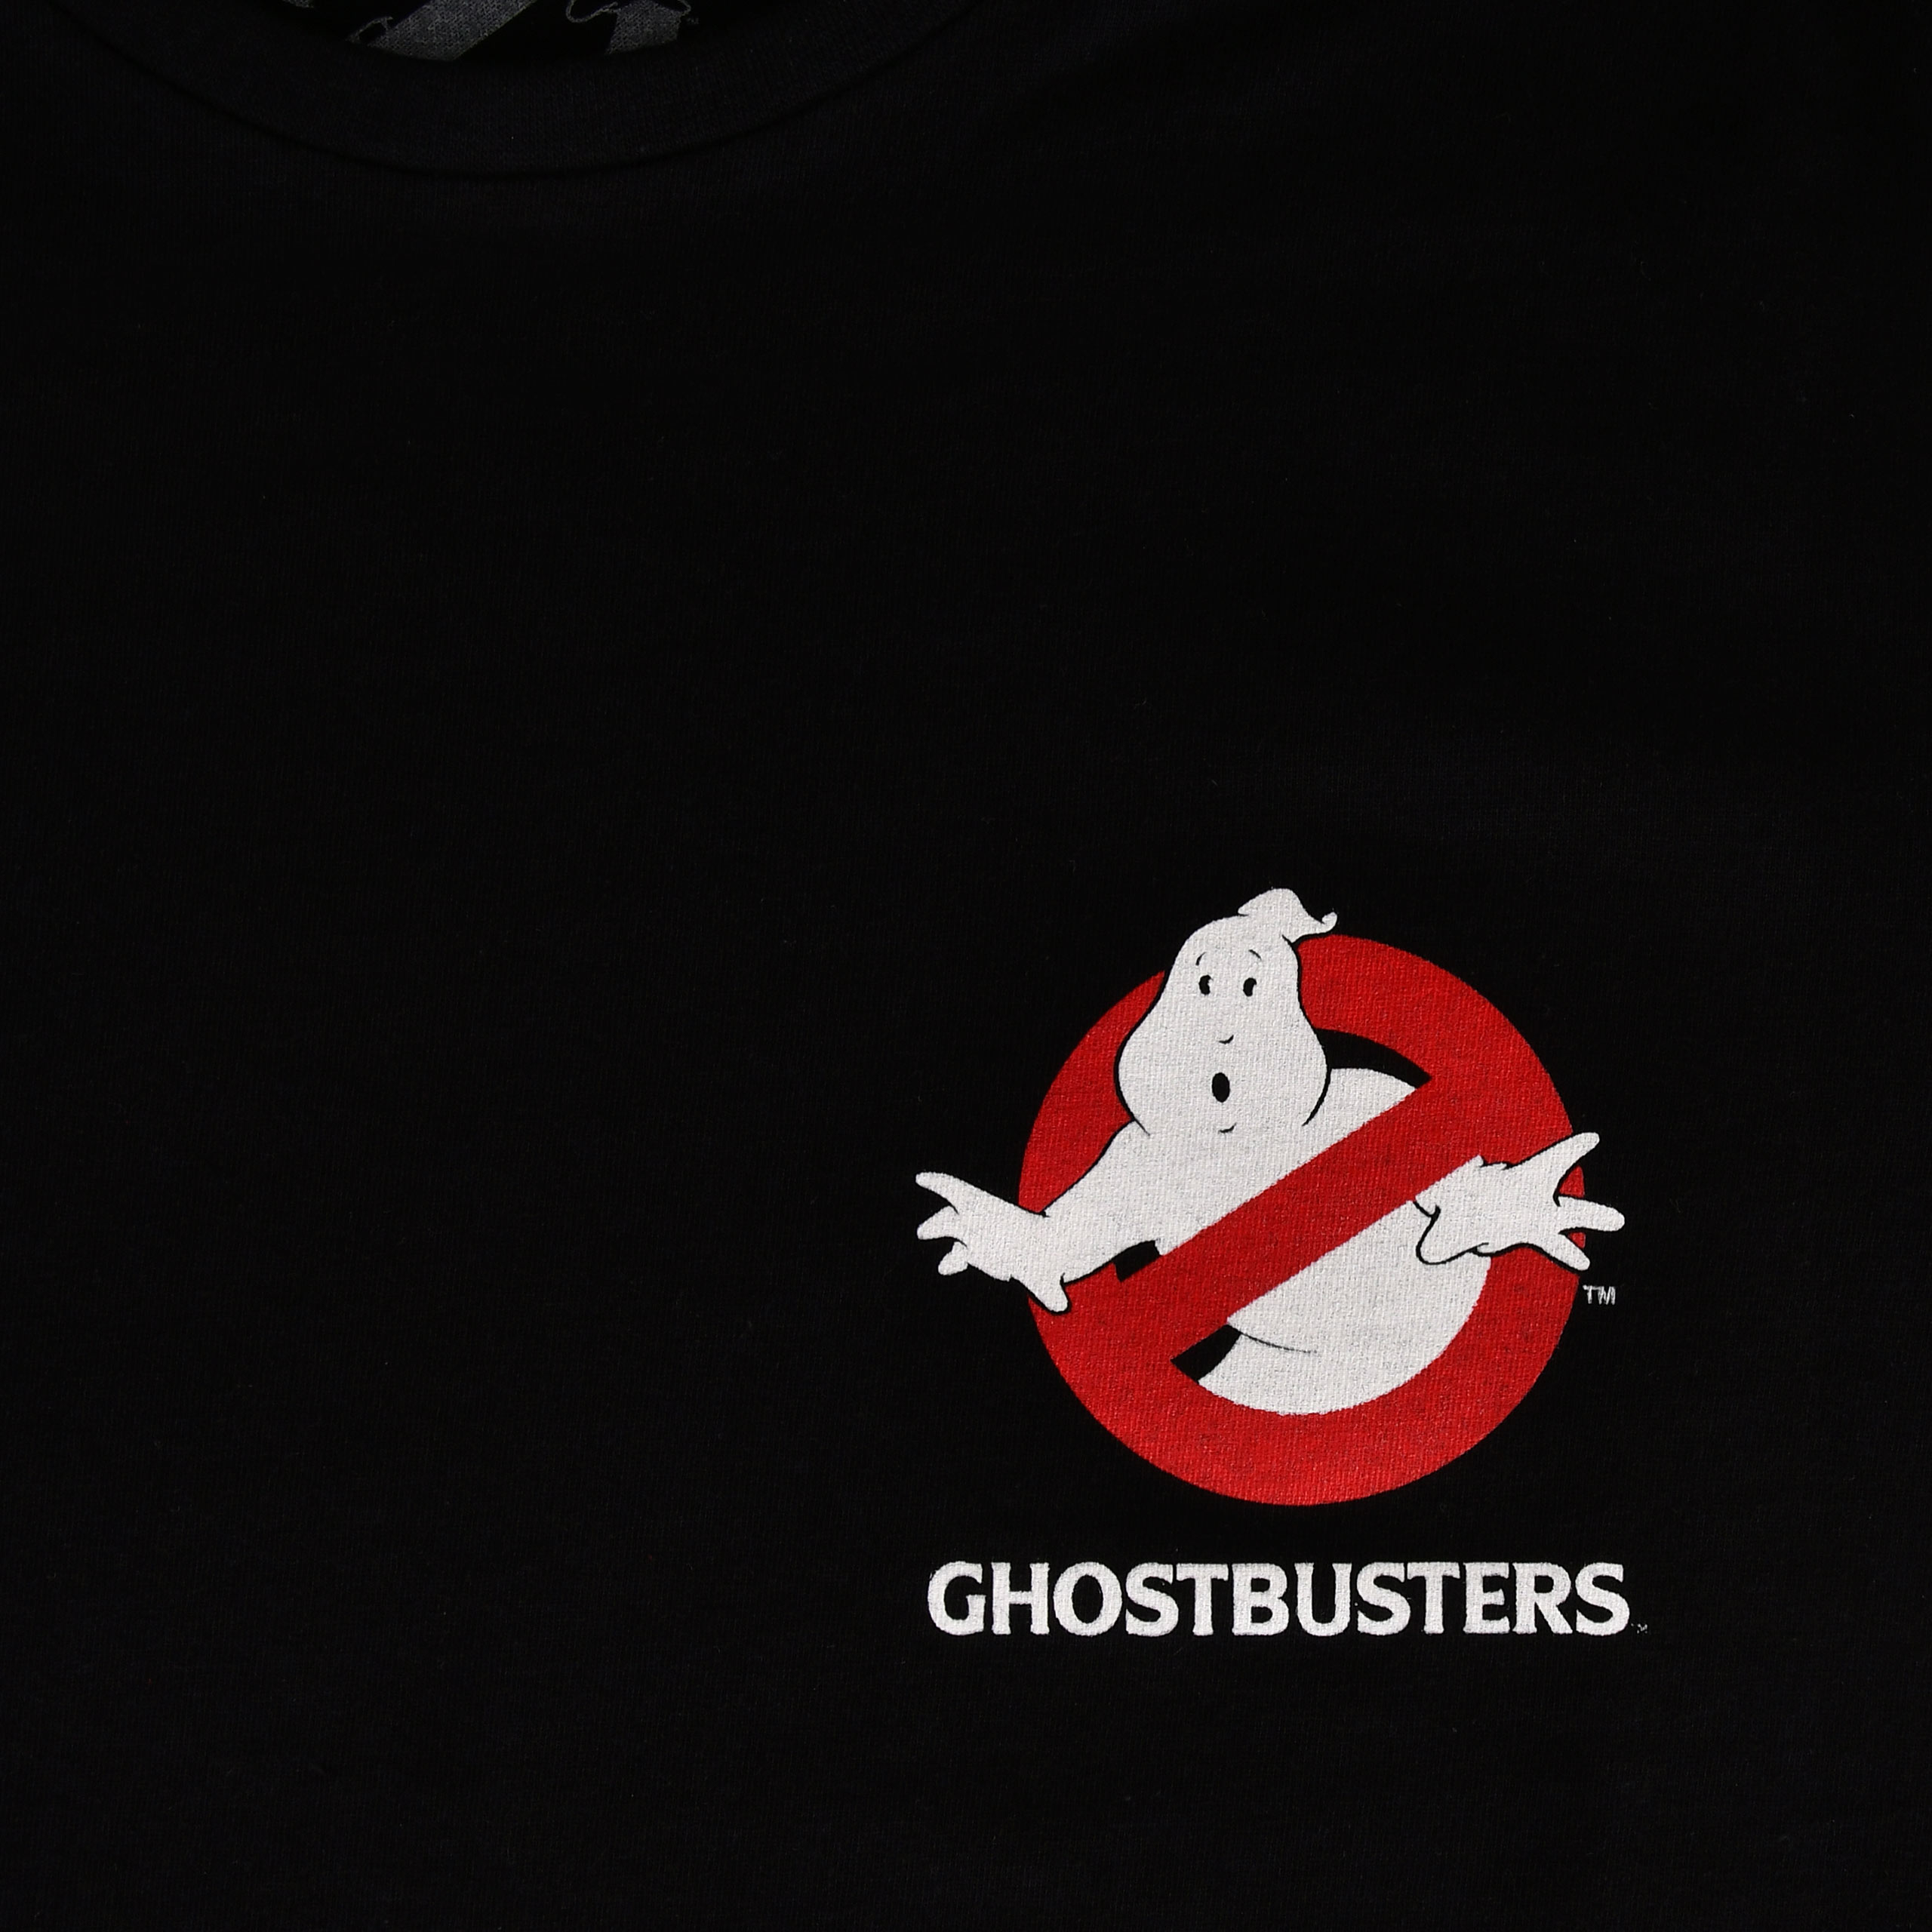 Ghostbusters - Paranormal Playlist T-Shirt schwarz